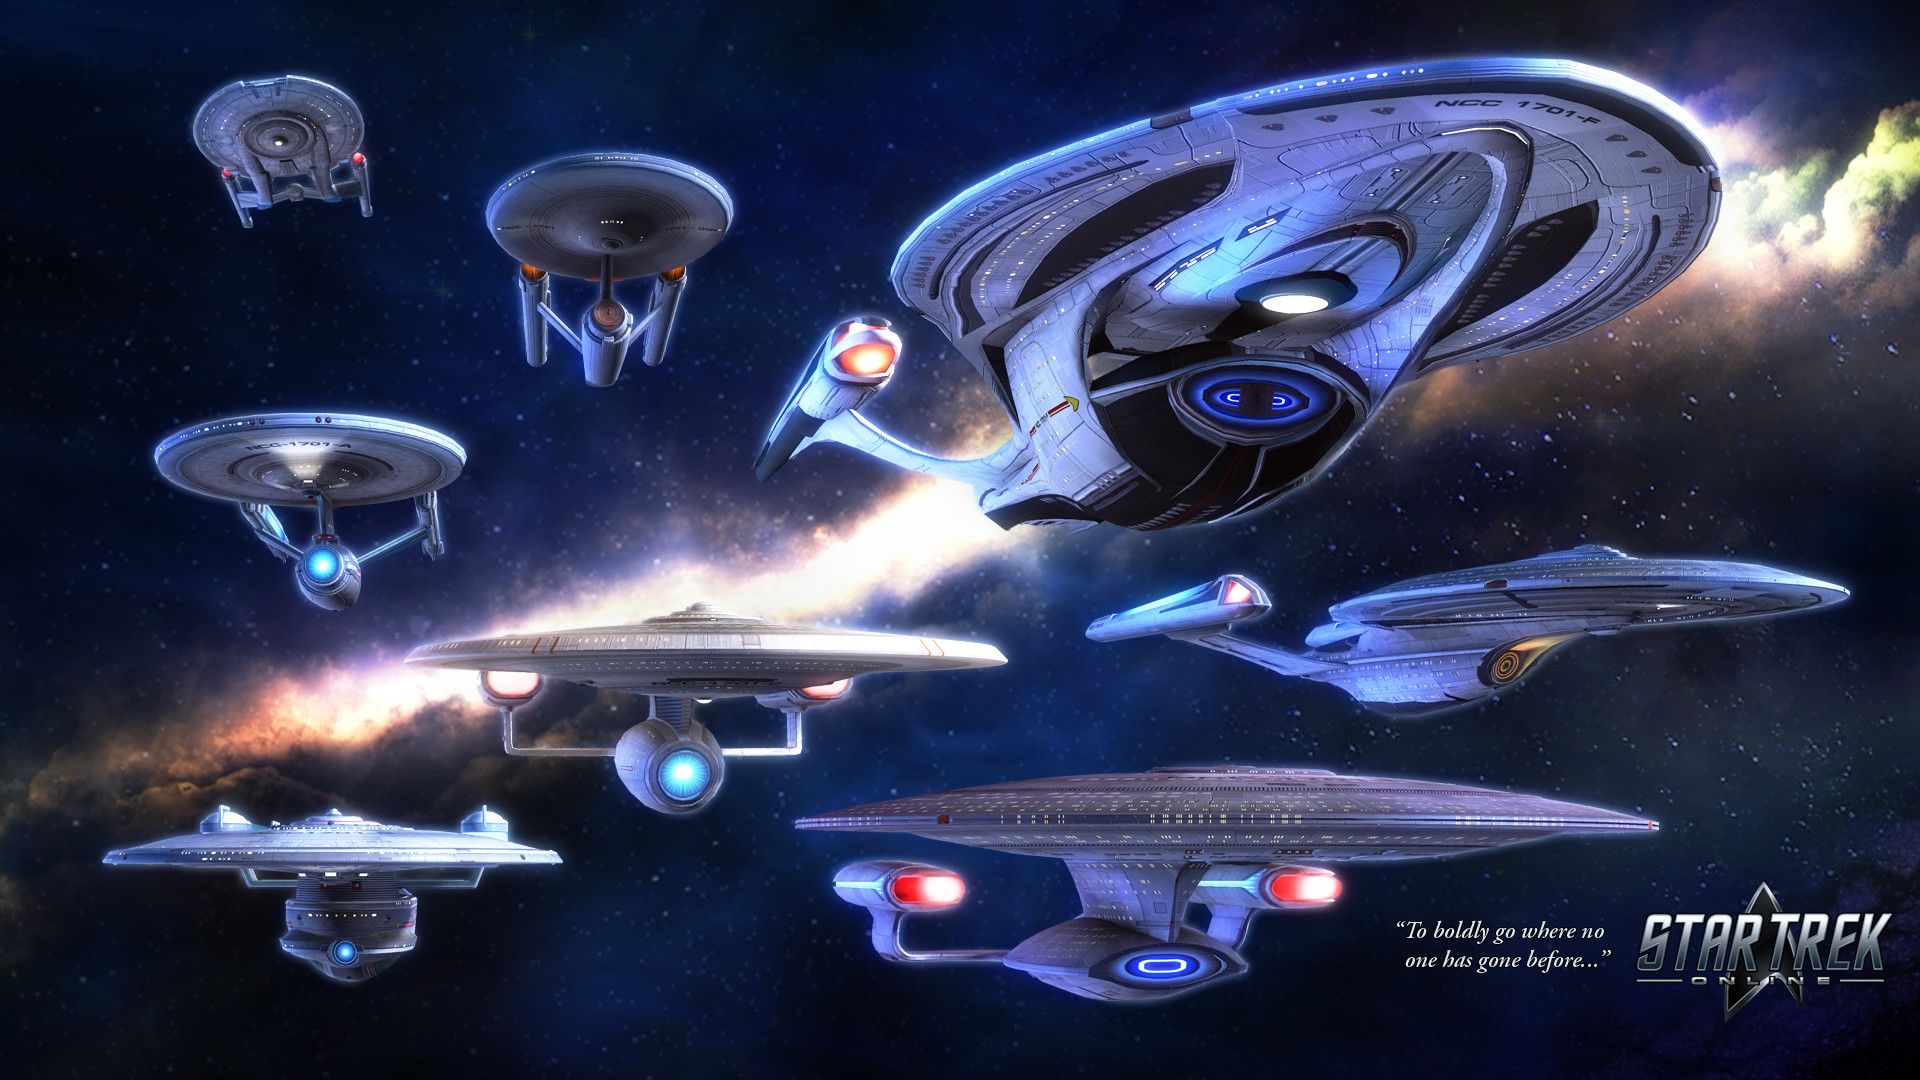 Star Trek Ships Wallpaper background picture